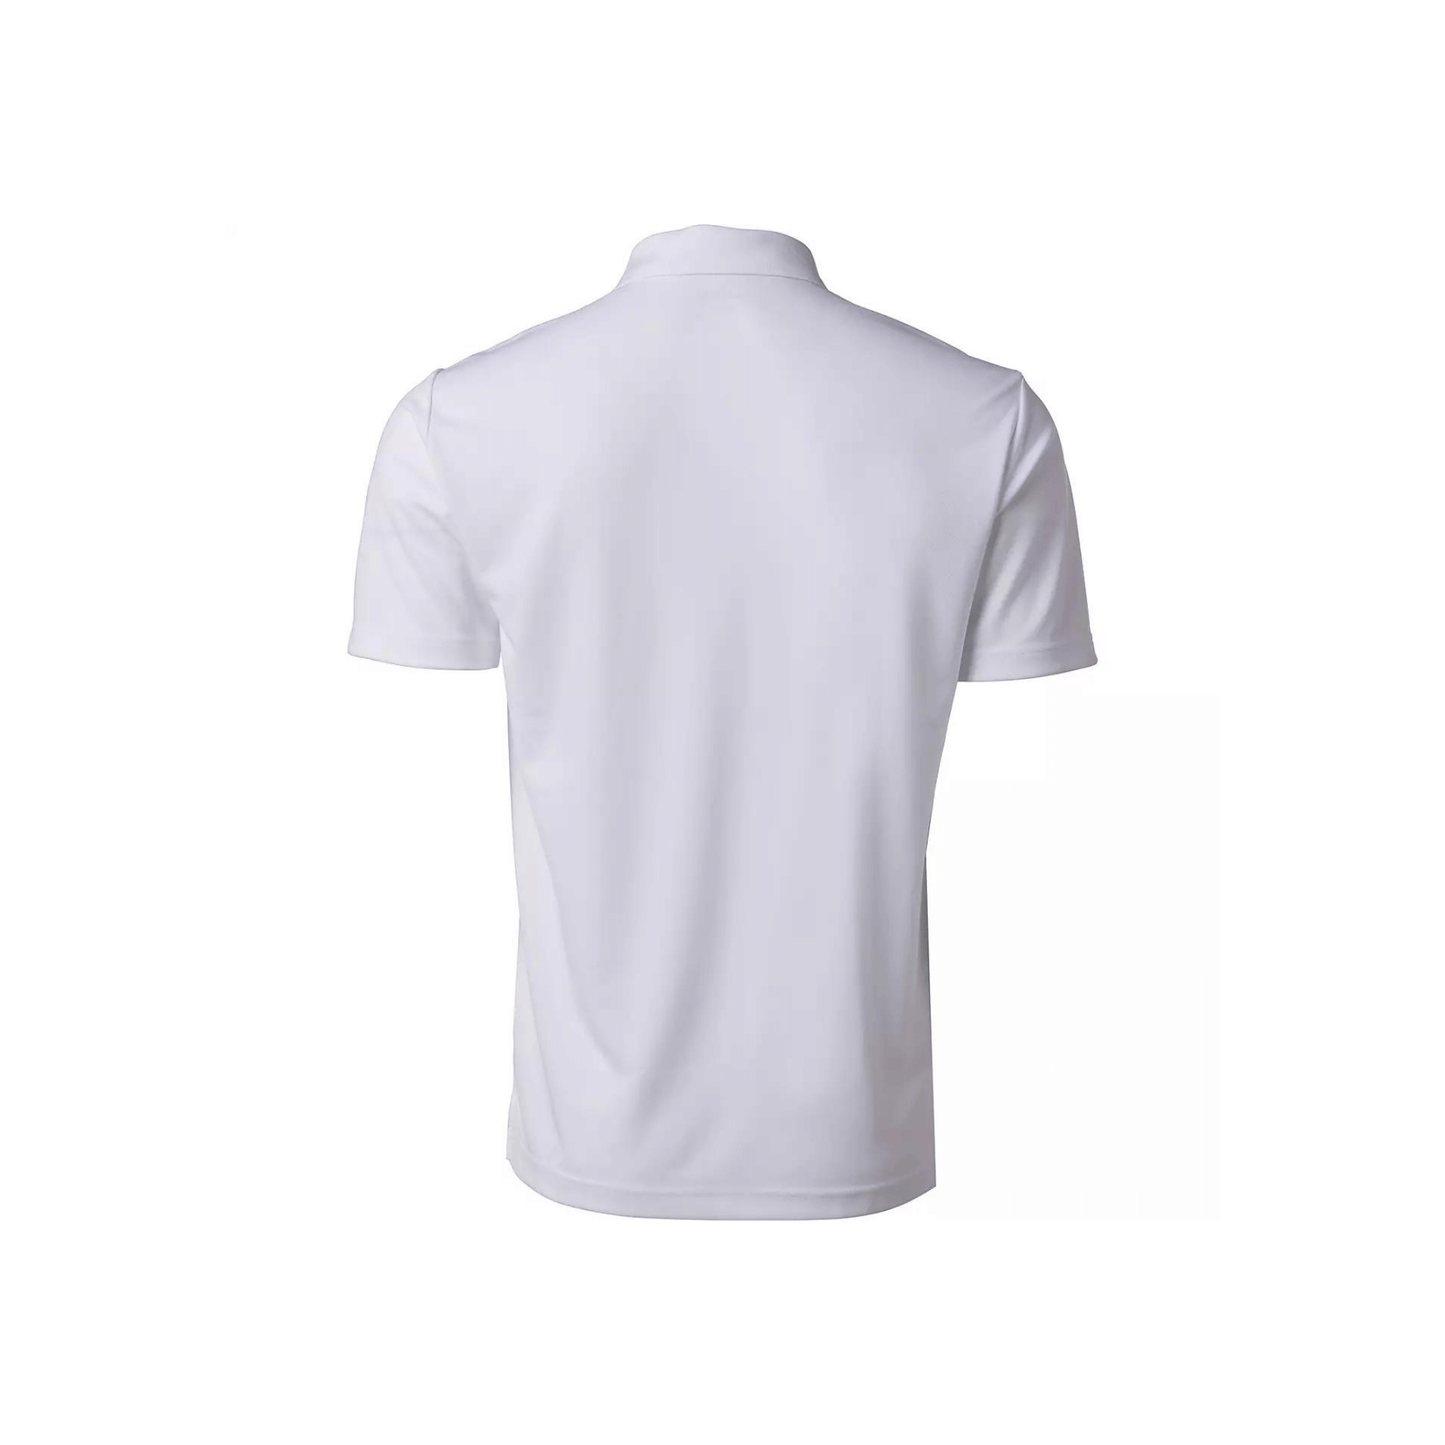 Business Polo's Shirt for everyday Wearing Sweatproof, Business shirt for Boss, Employee Professional collar shirt, Moisture-wicking shirt